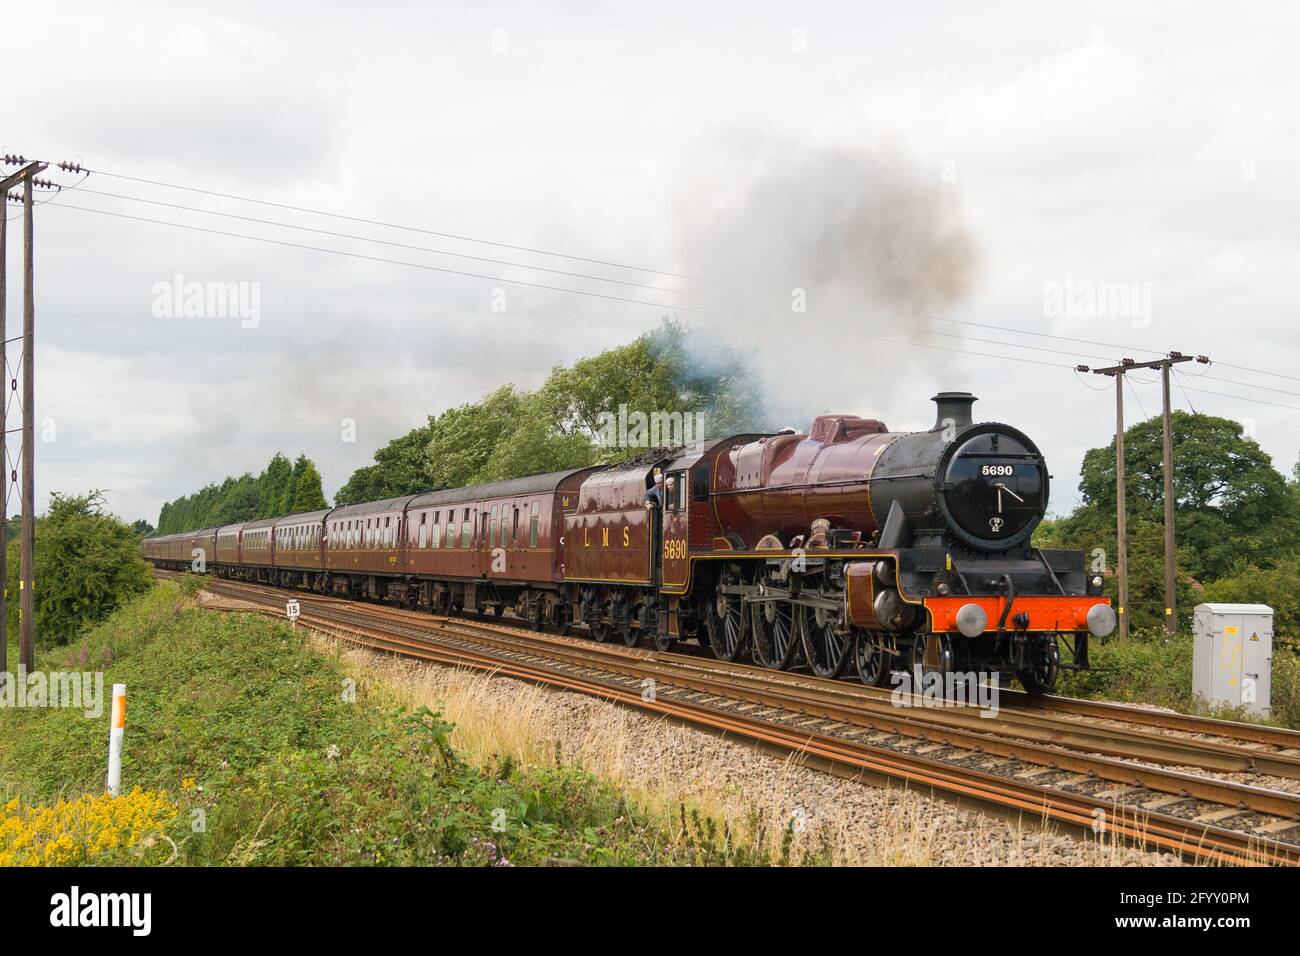 Leander on a mainline steam train Stock Photo